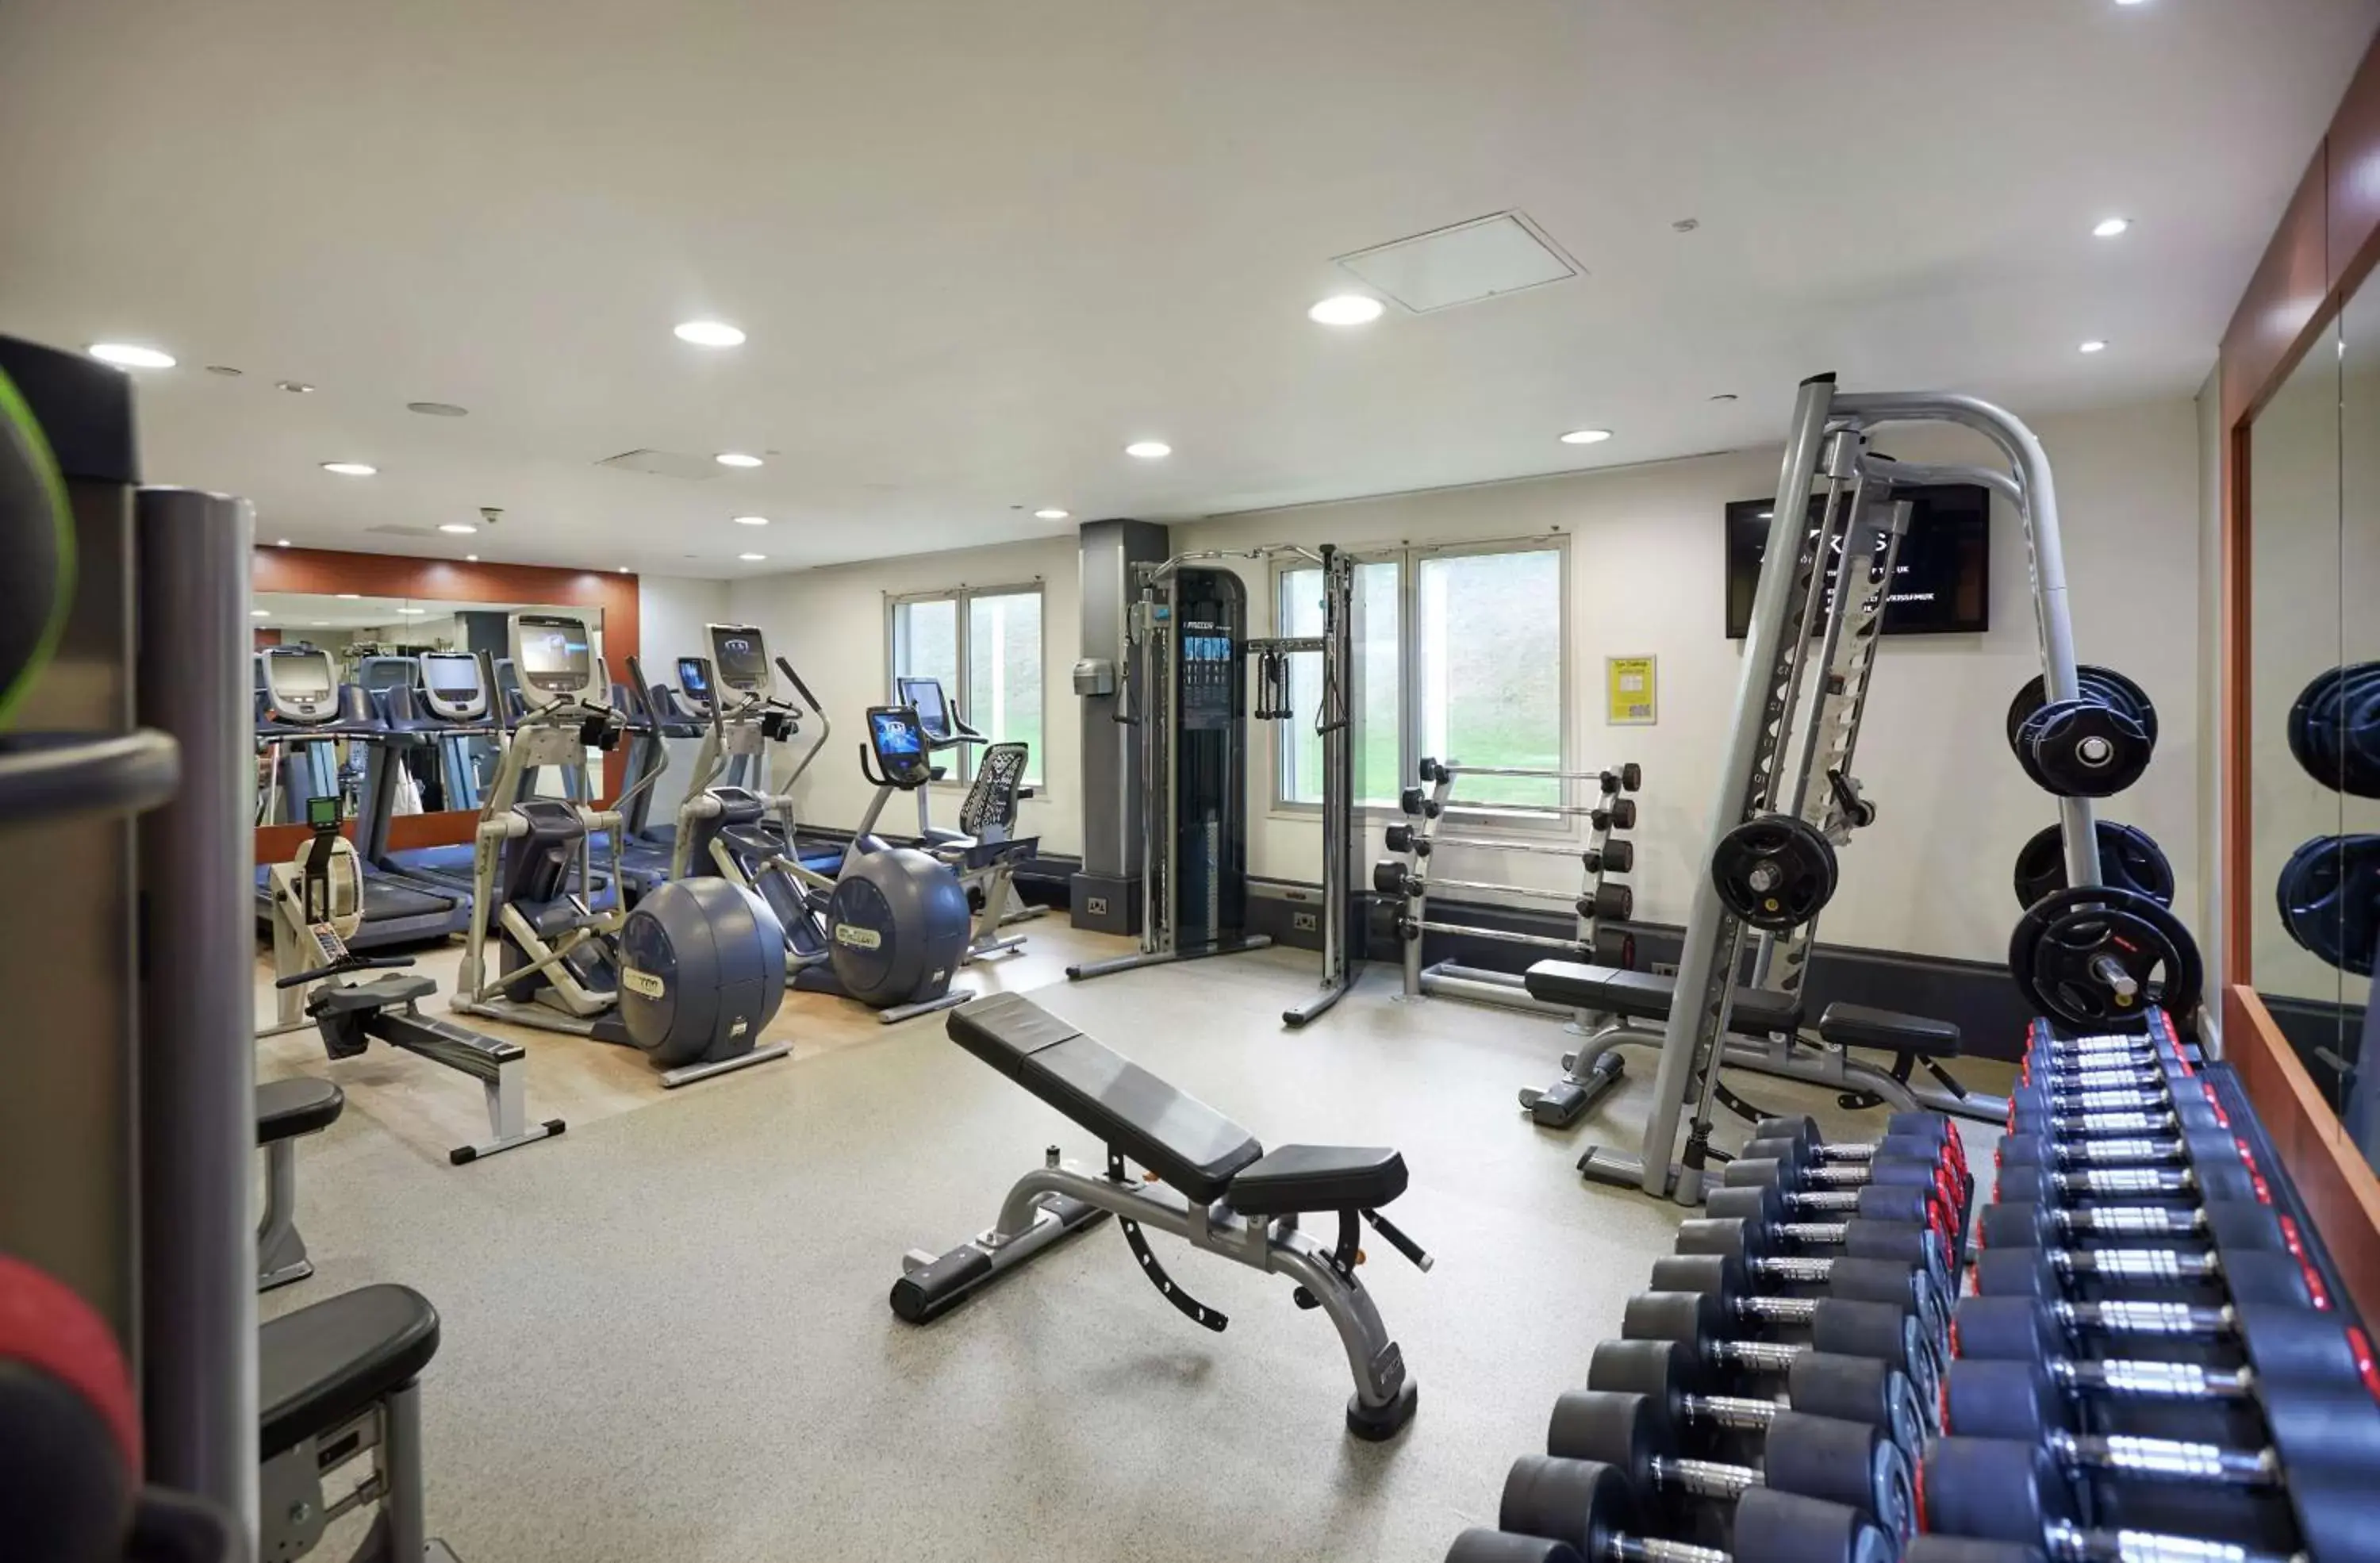 Fitness centre/facilities, Fitness Center/Facilities in Hilton London Heathrow Airport